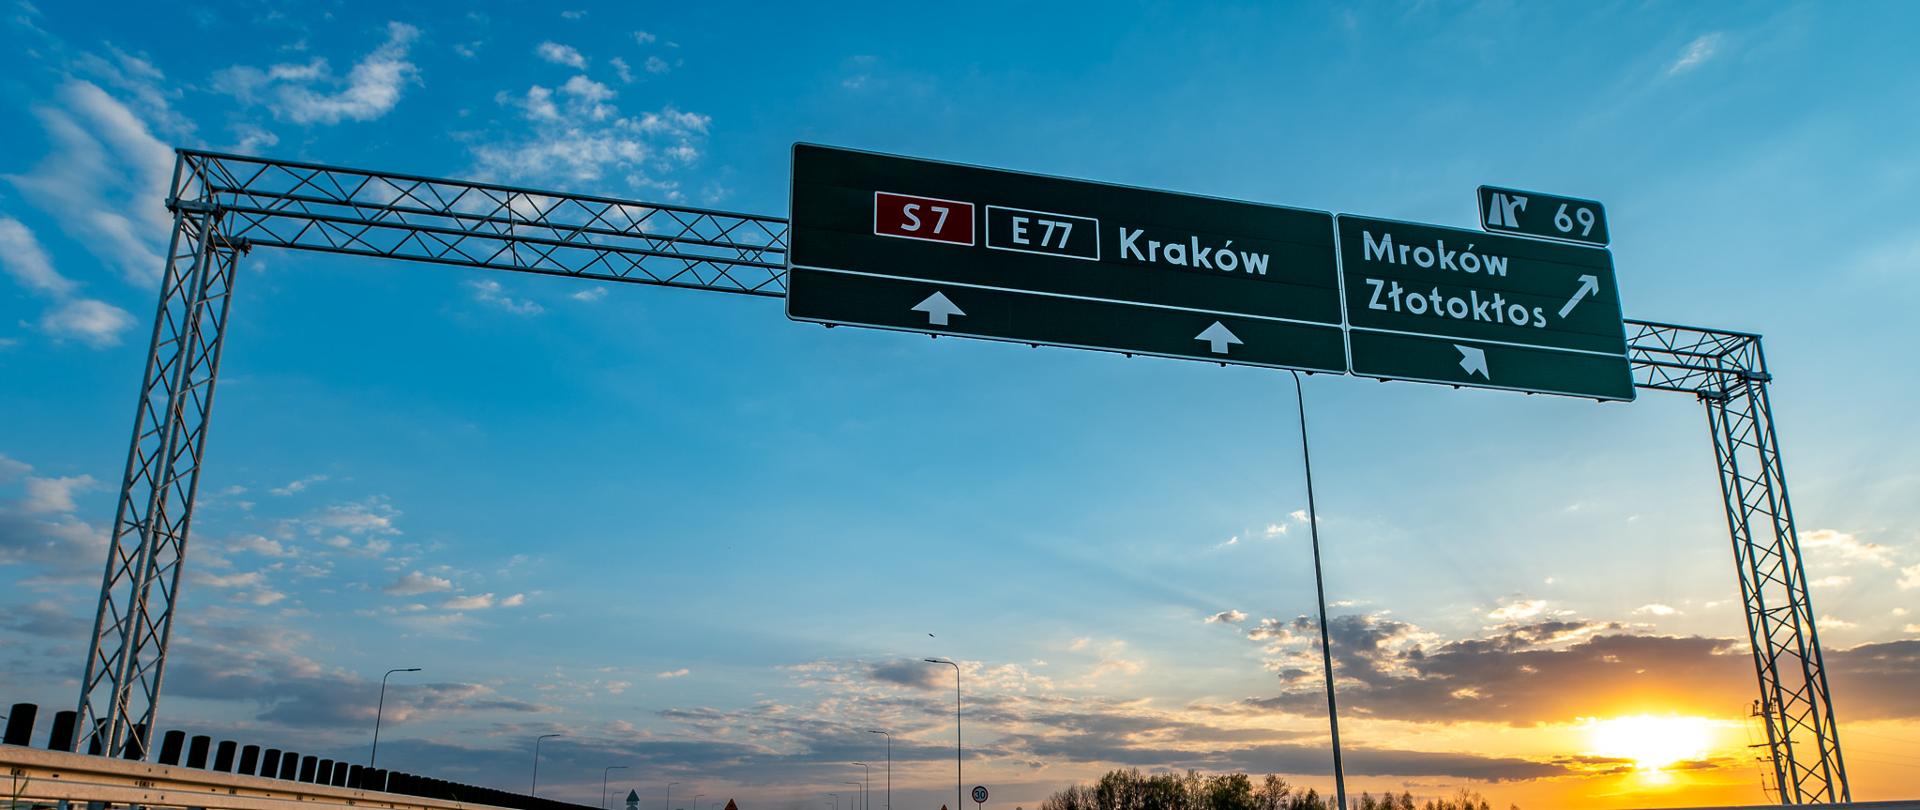 S7 Lesznowola - Tarczyn Północ